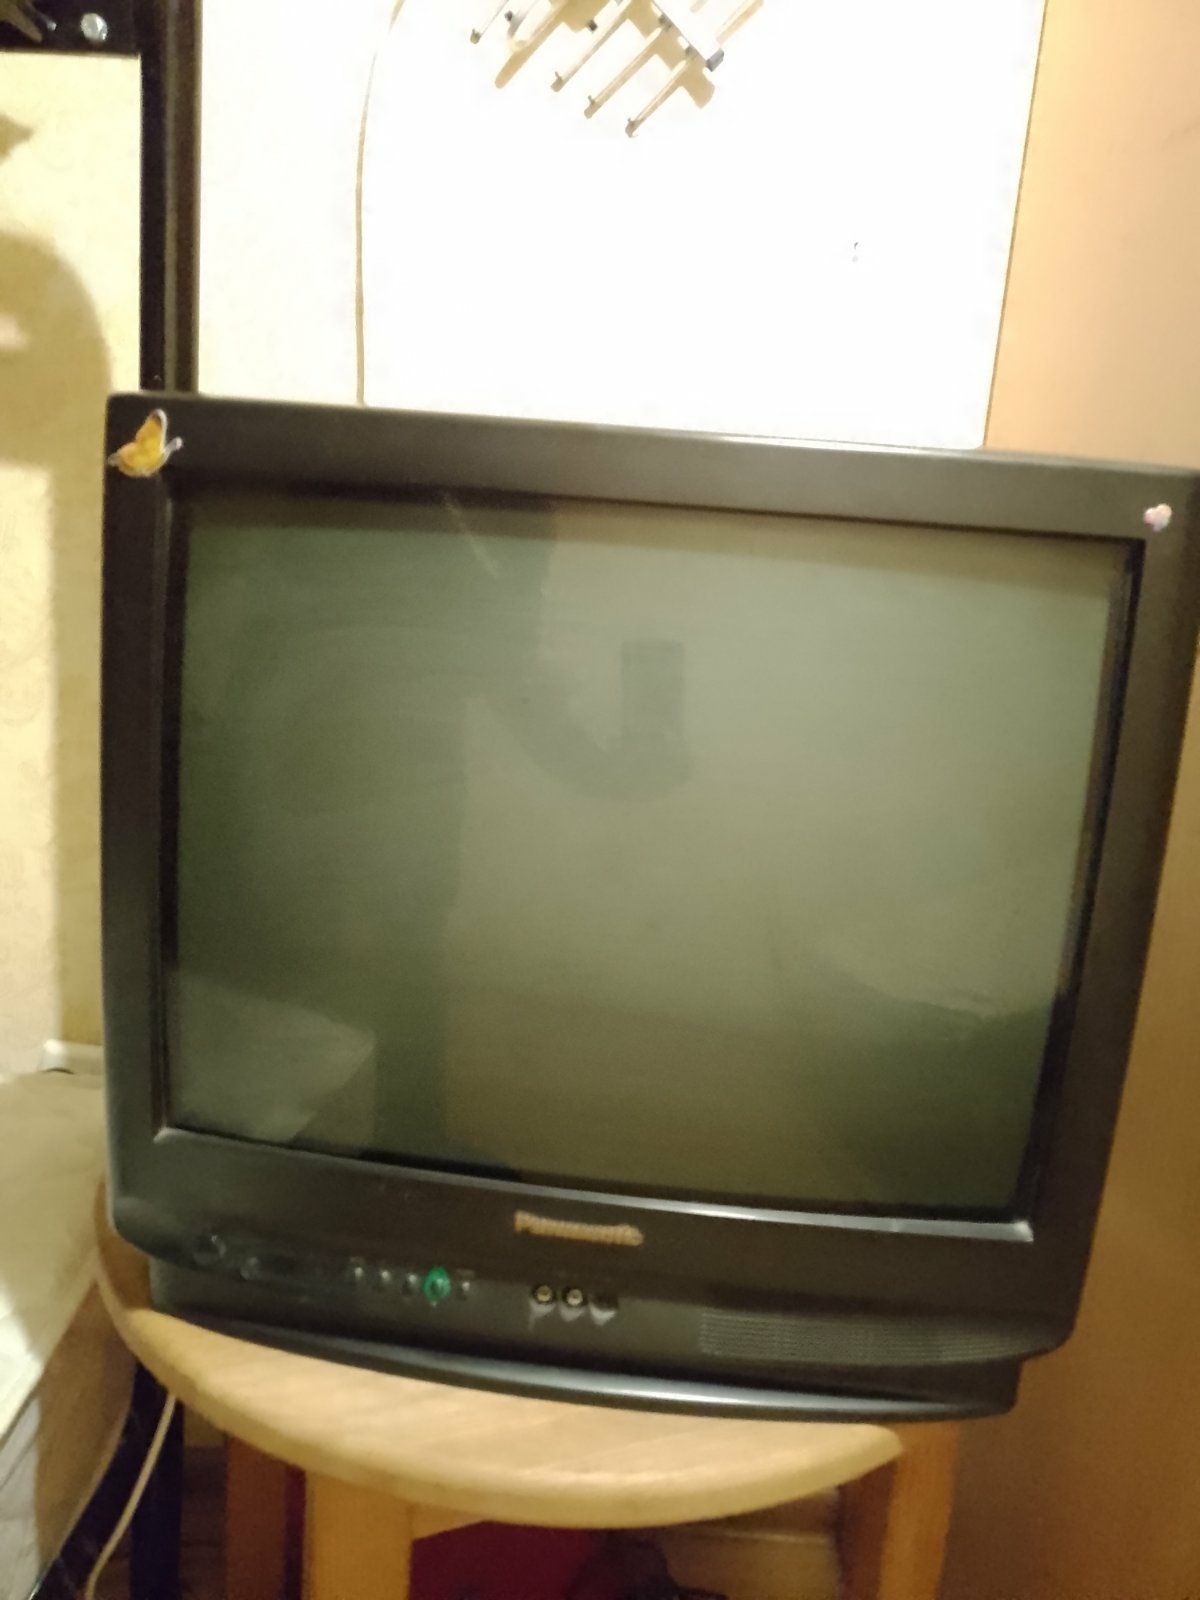 Телевизор  продам